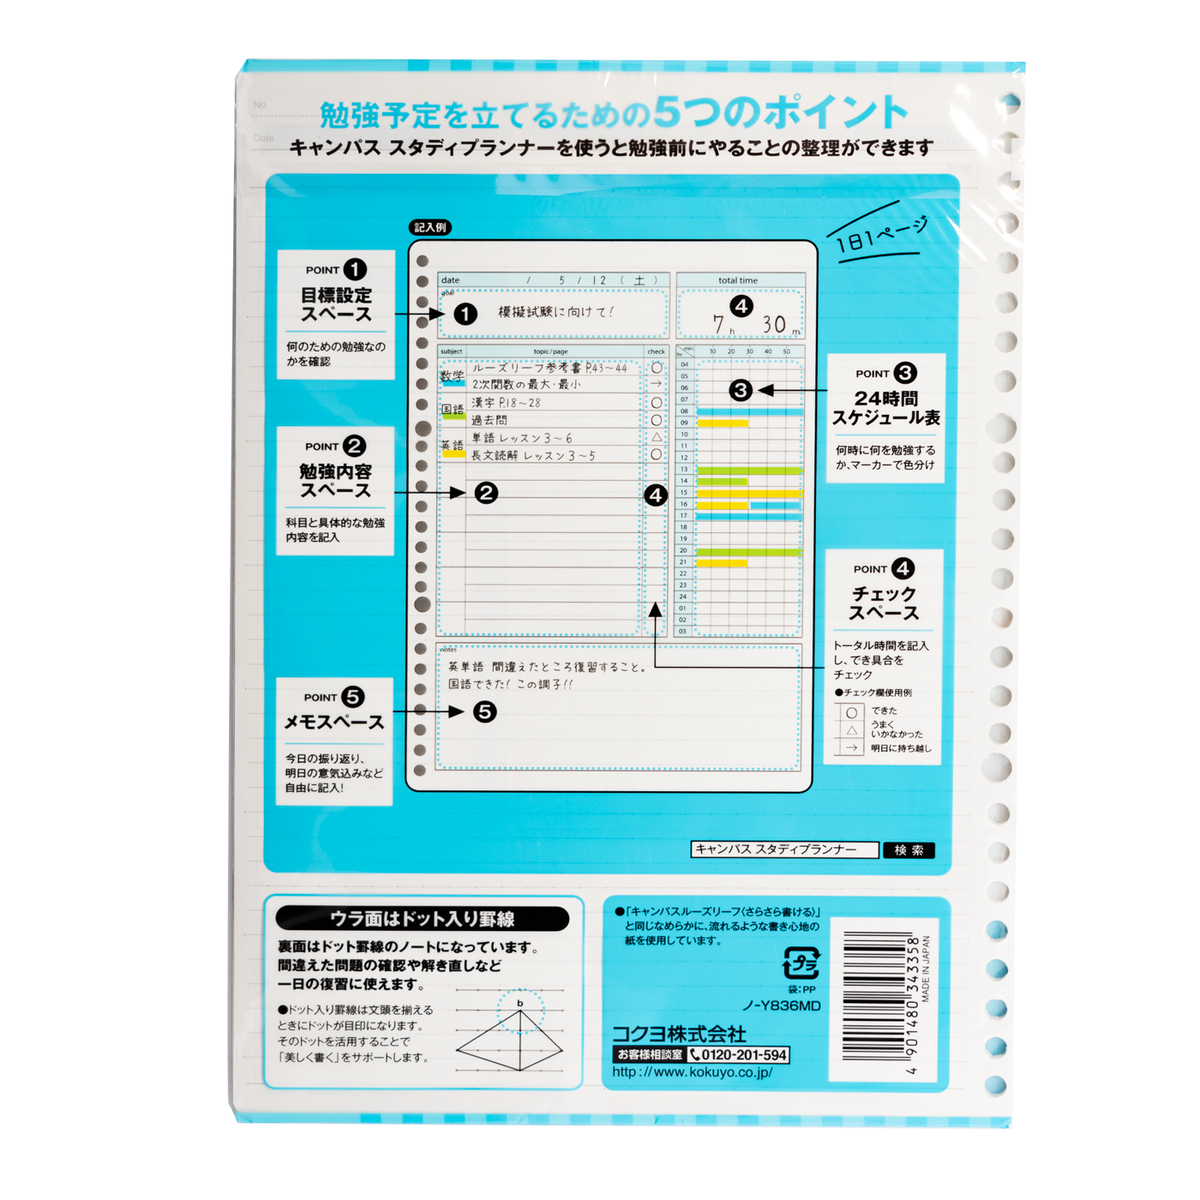 Kokuyo Campus B5 Loose Leaf- Daily Visualized Study Planner